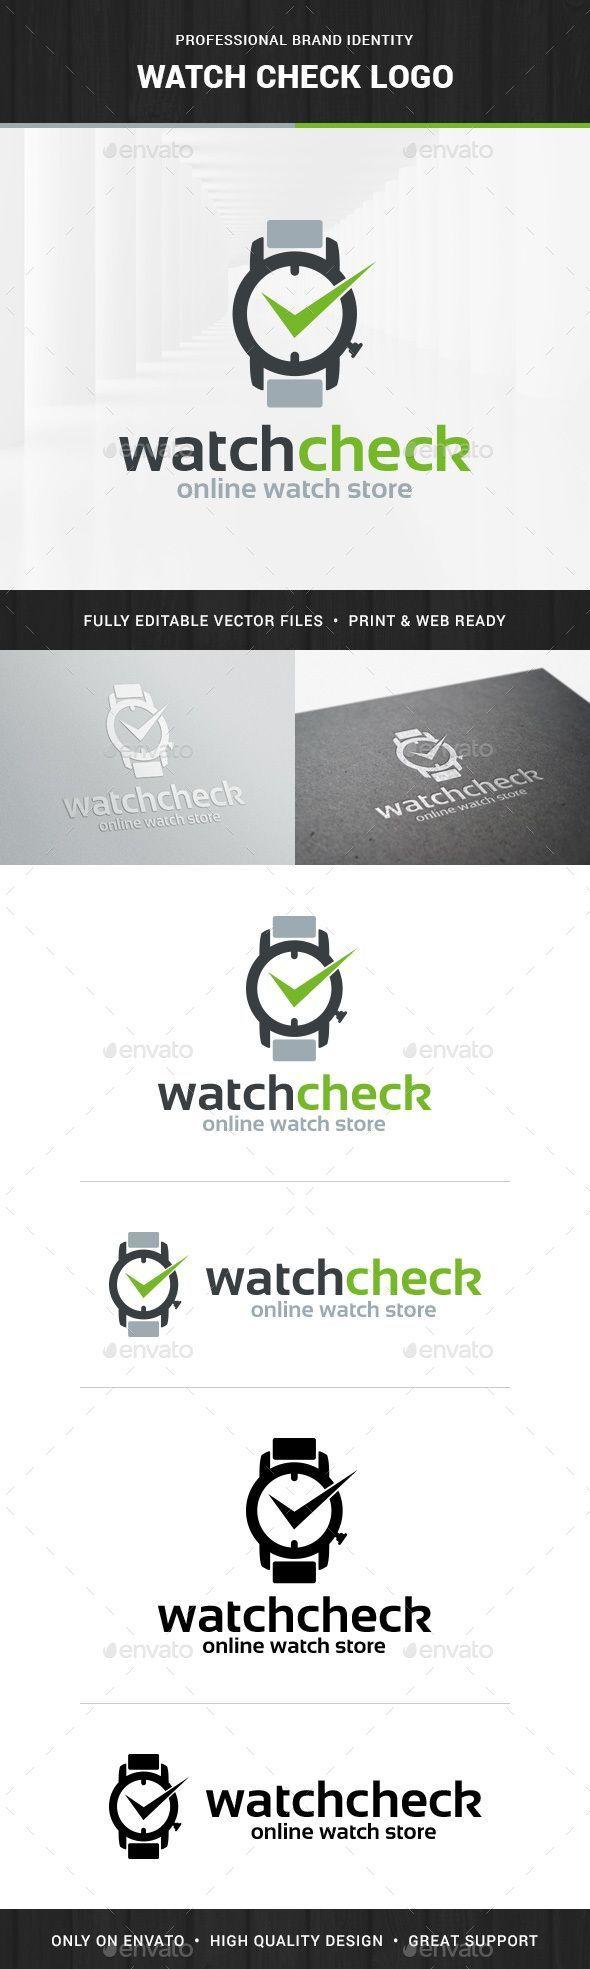 Modern Check Mark Logo - The Watch Check Logo Template A modern watch logo with a check mark ...